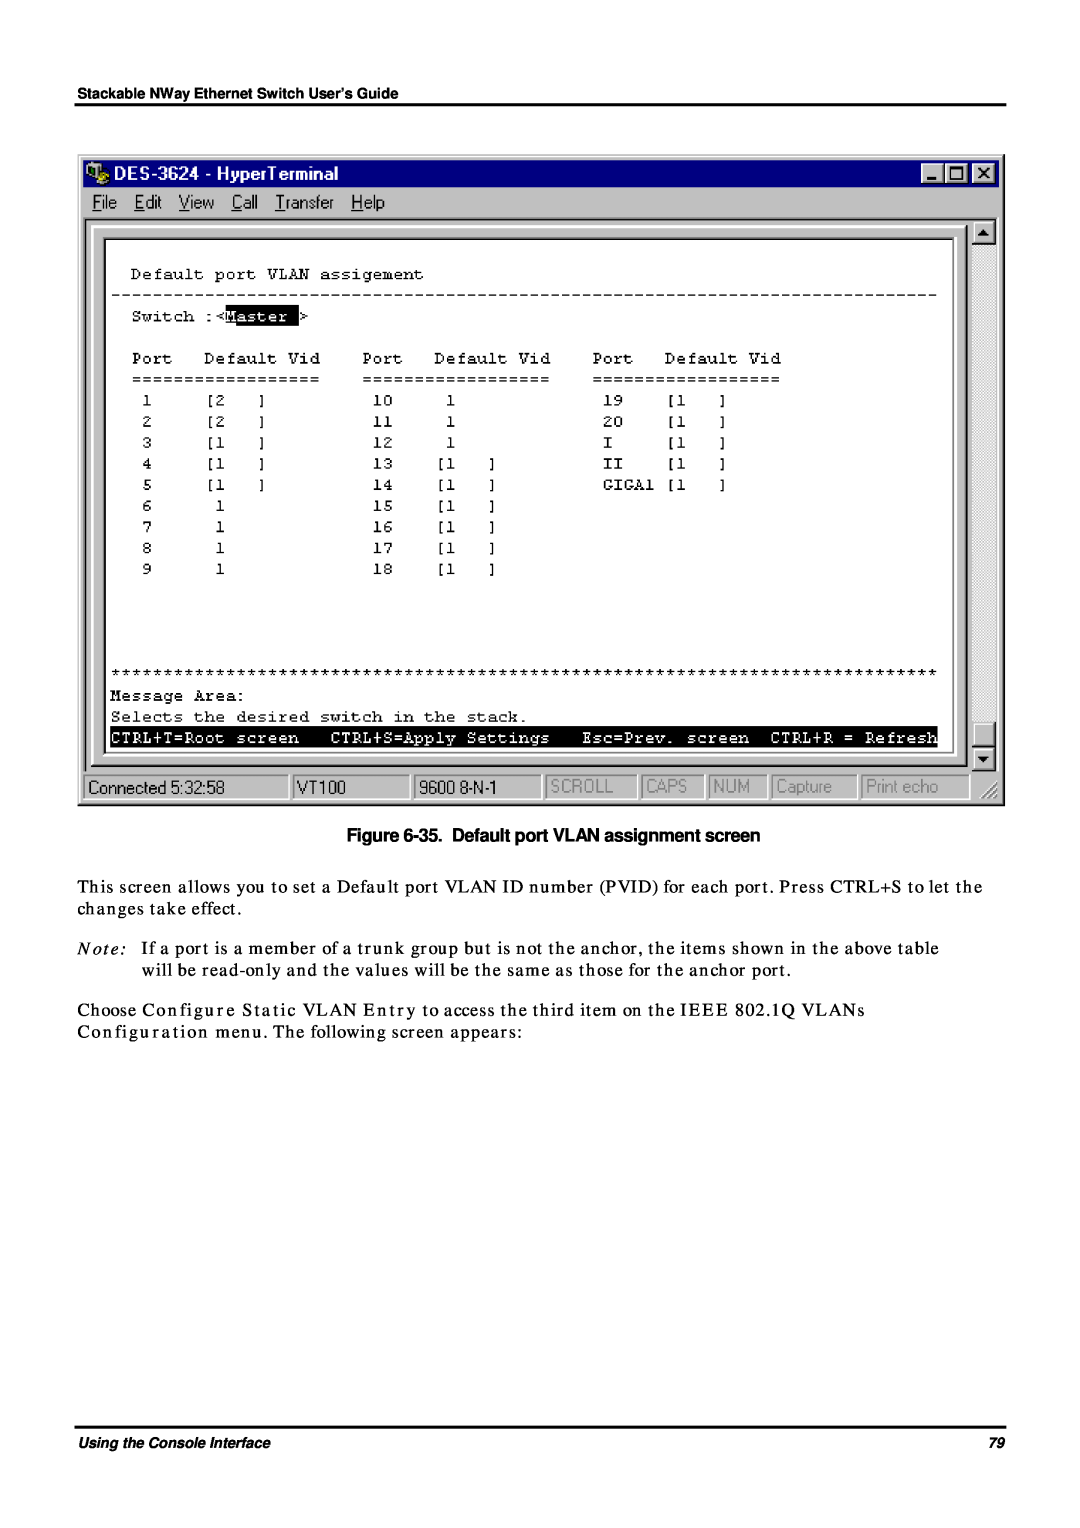 D-Link DES-3624 manual 35. Default port VLAN assignment screen 